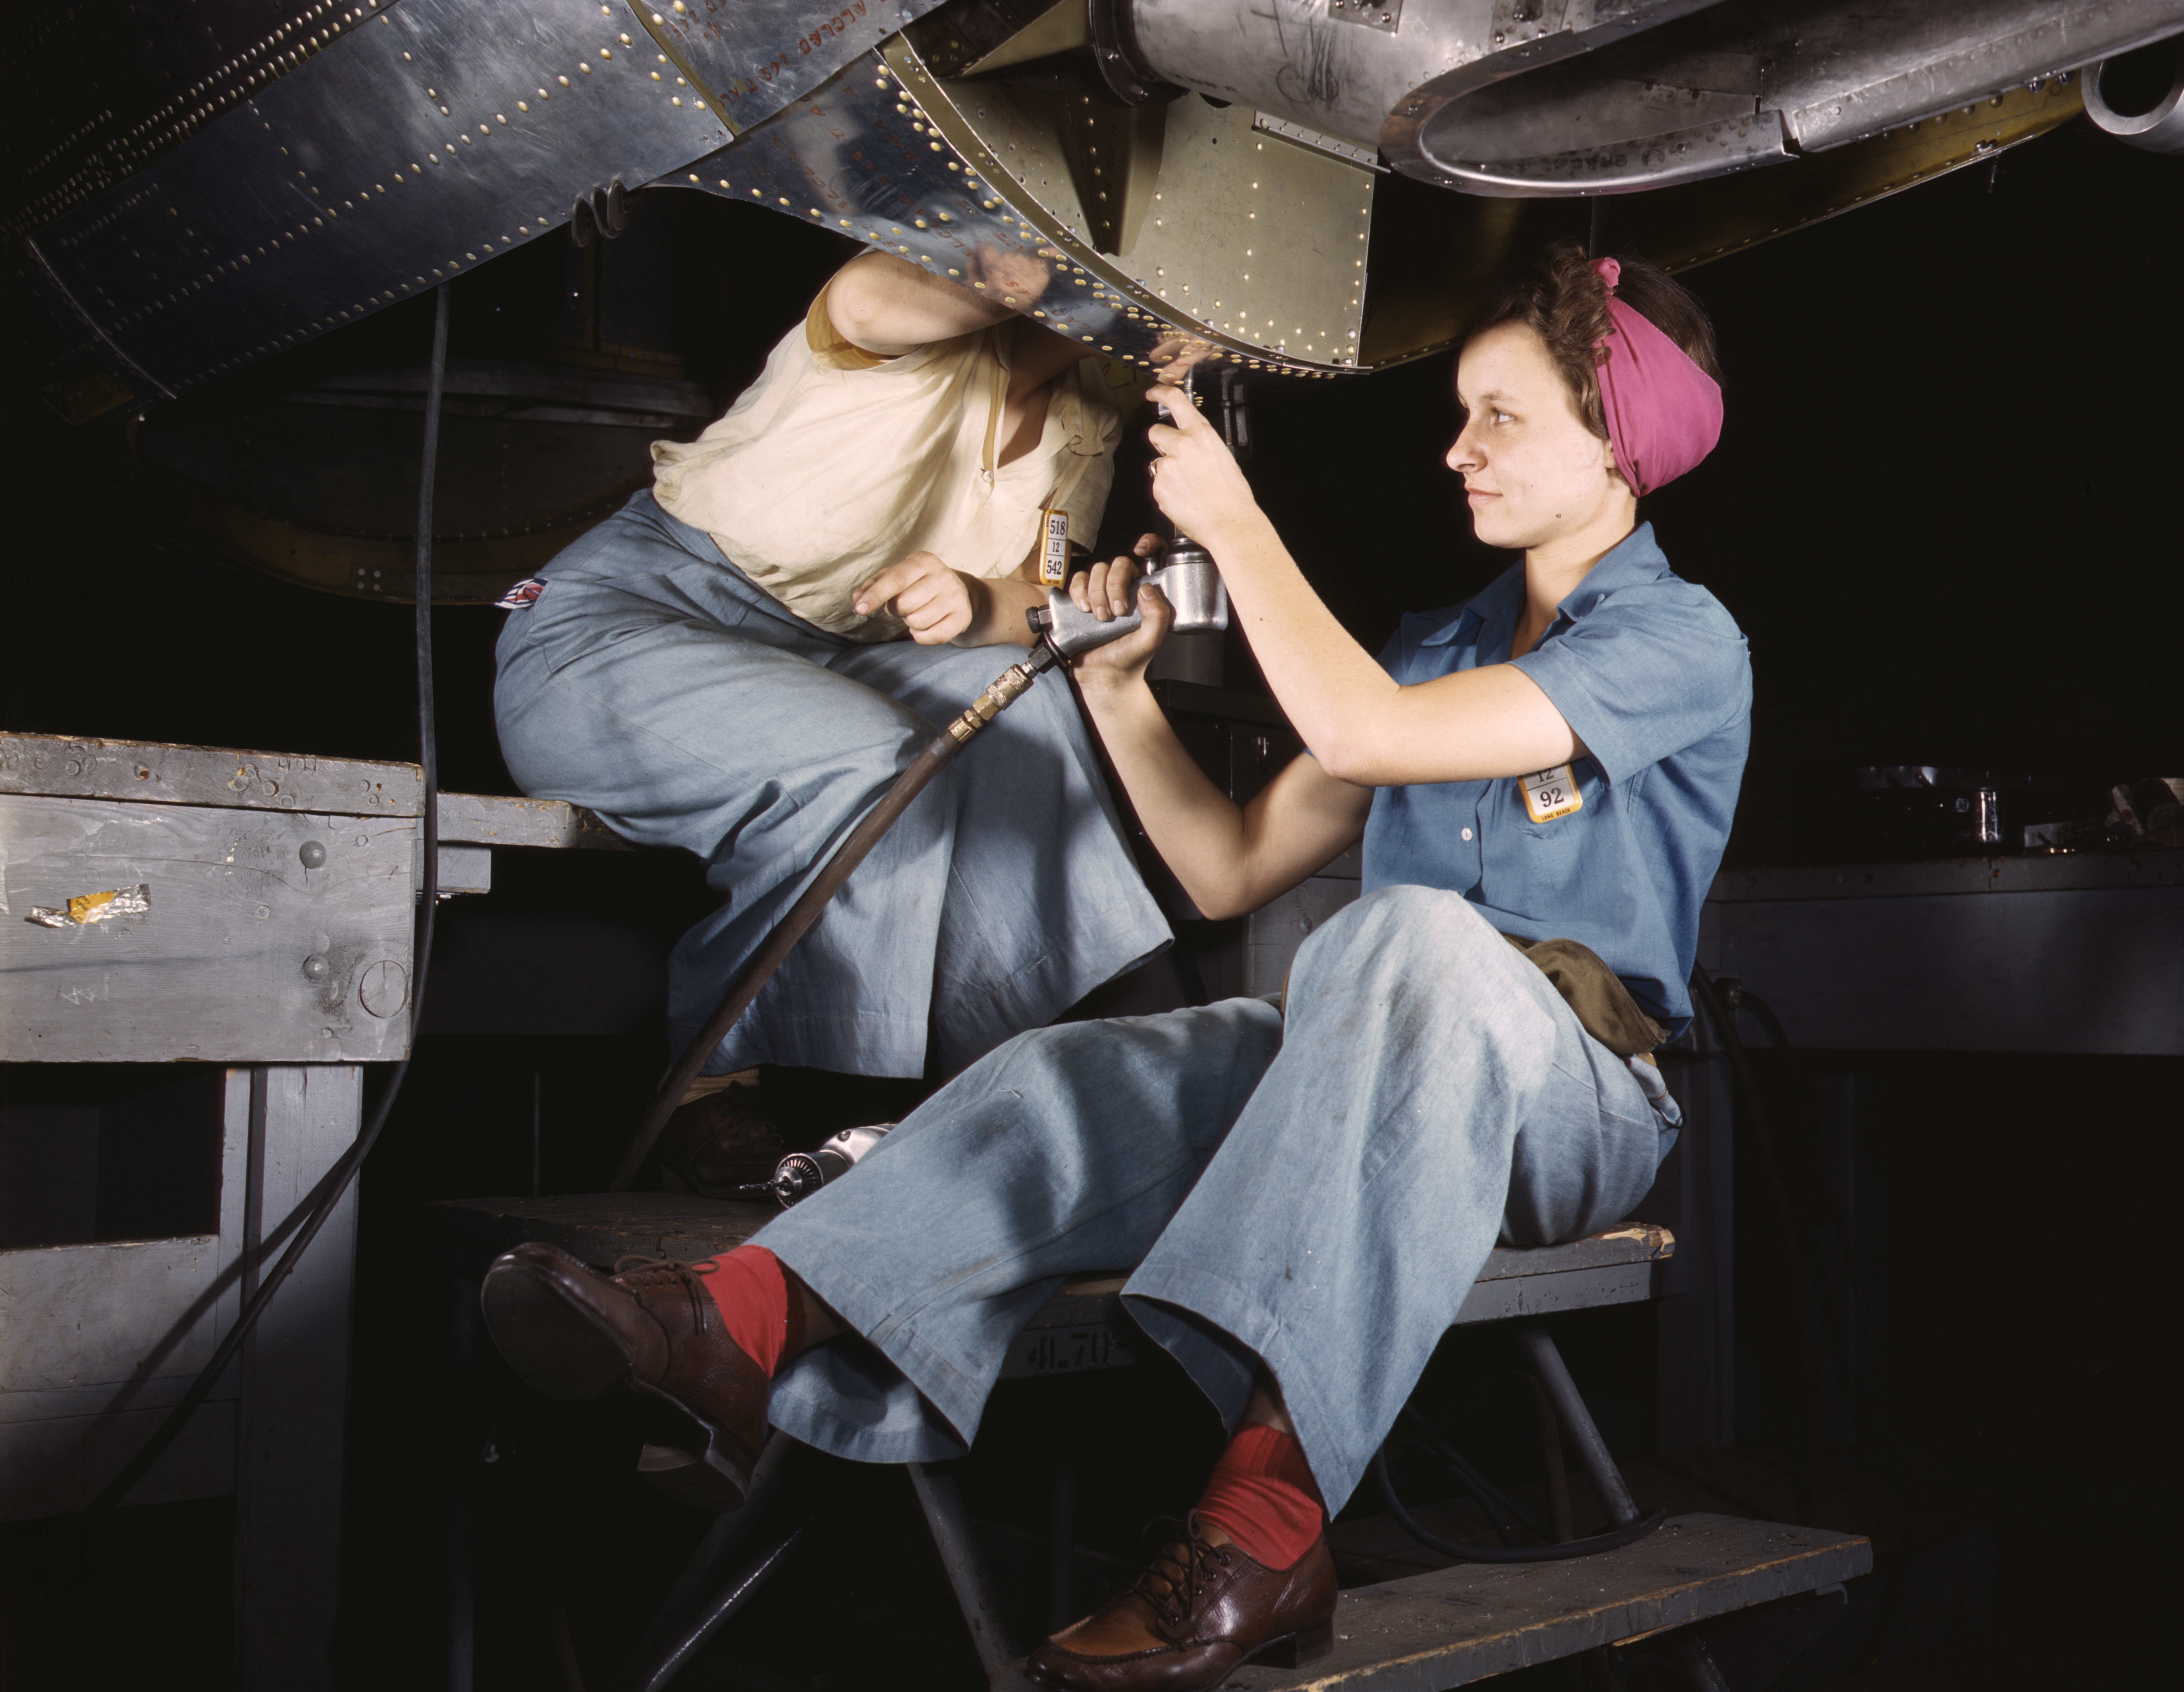 http://upload.wikimedia.org/wikipedia/commons/7/79/Women_working_at_Douglas_Aircraft.jpg